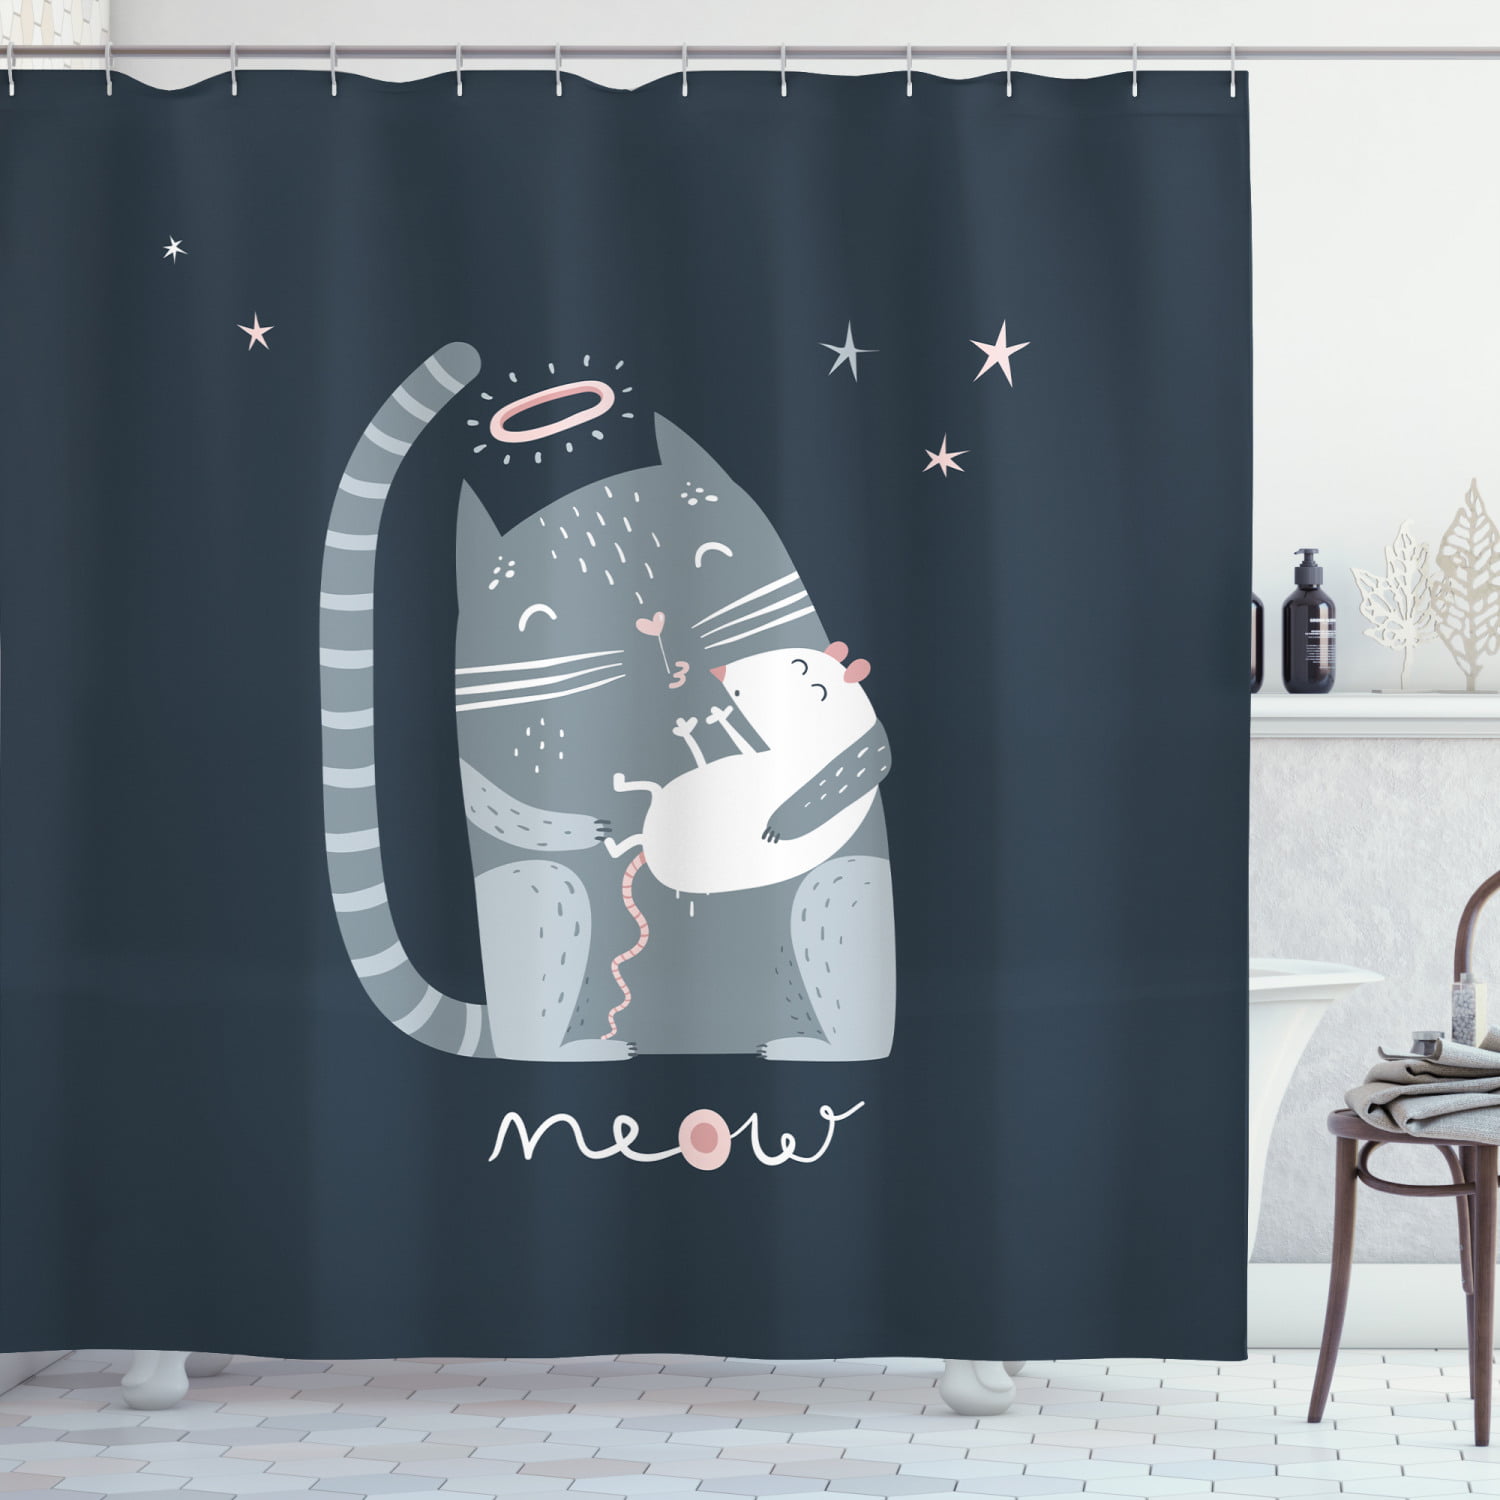 Rhino At Night Wild Animal Bathroom Fabric Shower Curtain & 12 Hooks 71x71 inch 